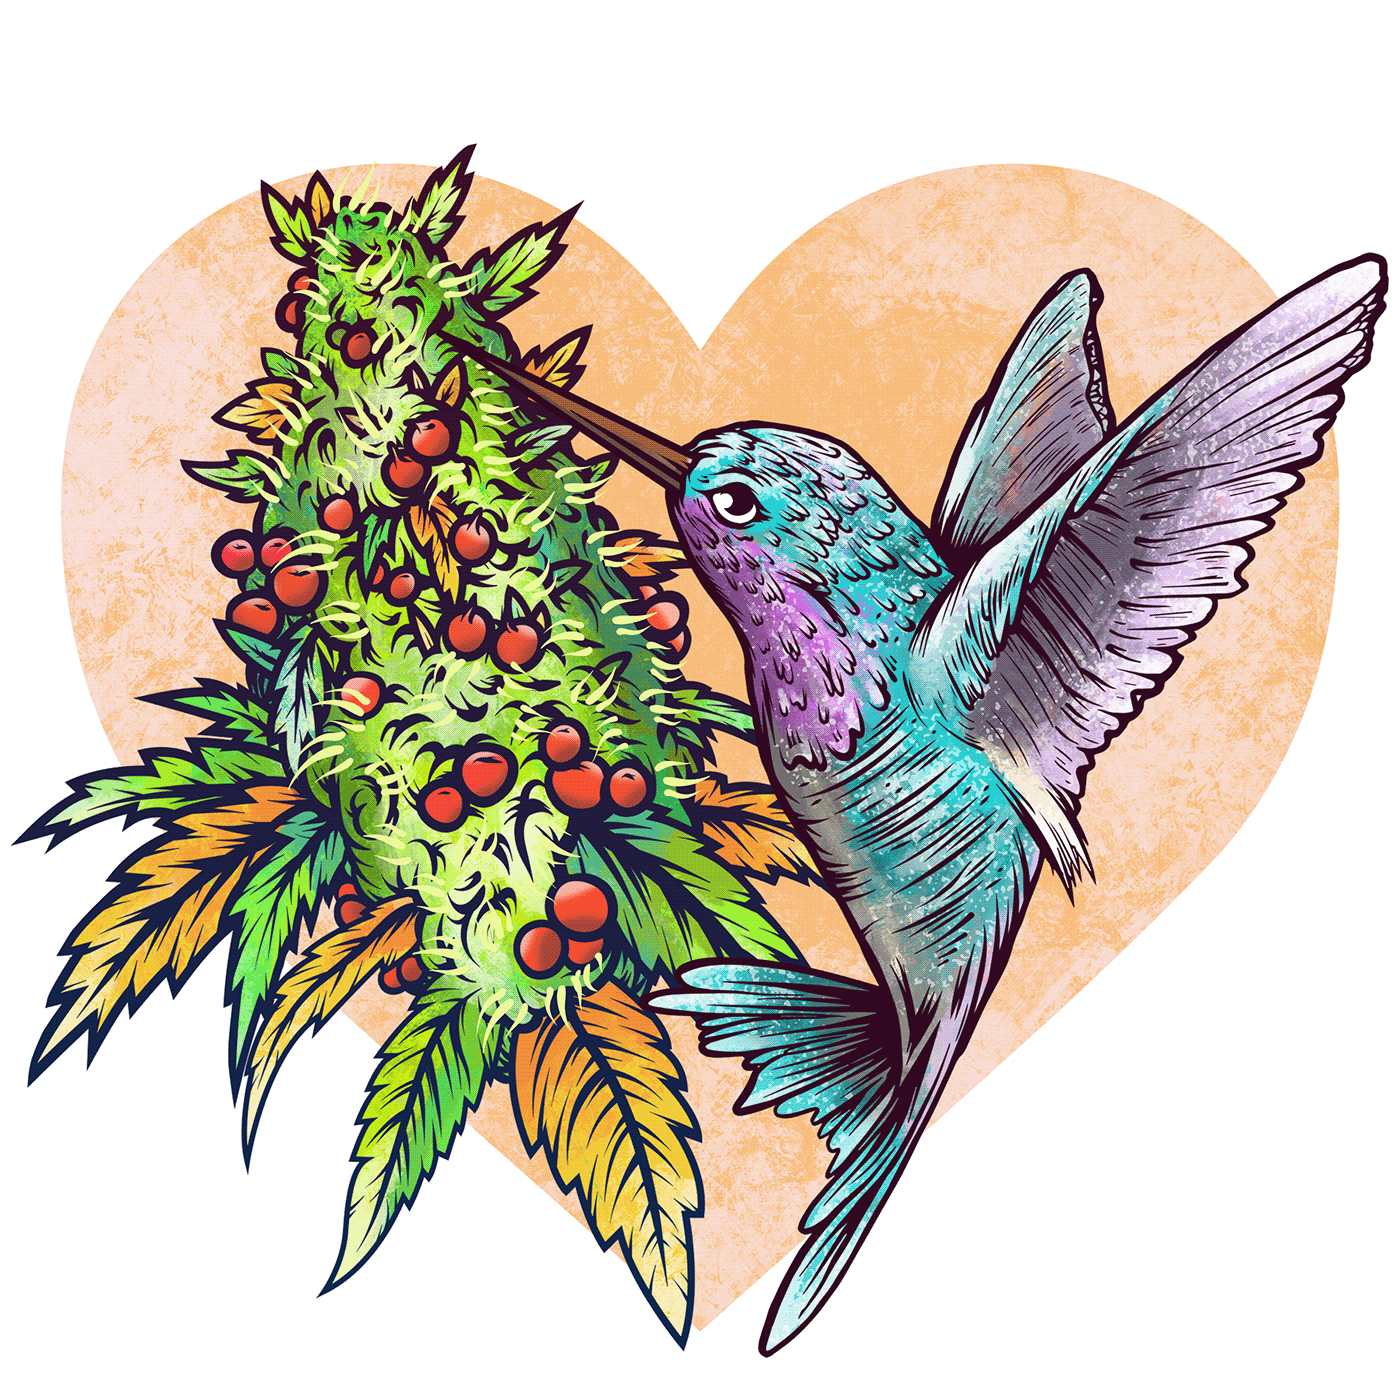 420+ cannabis CBD ILLUSTRATION  ilustracion Kush marihuana marijuana thc weed